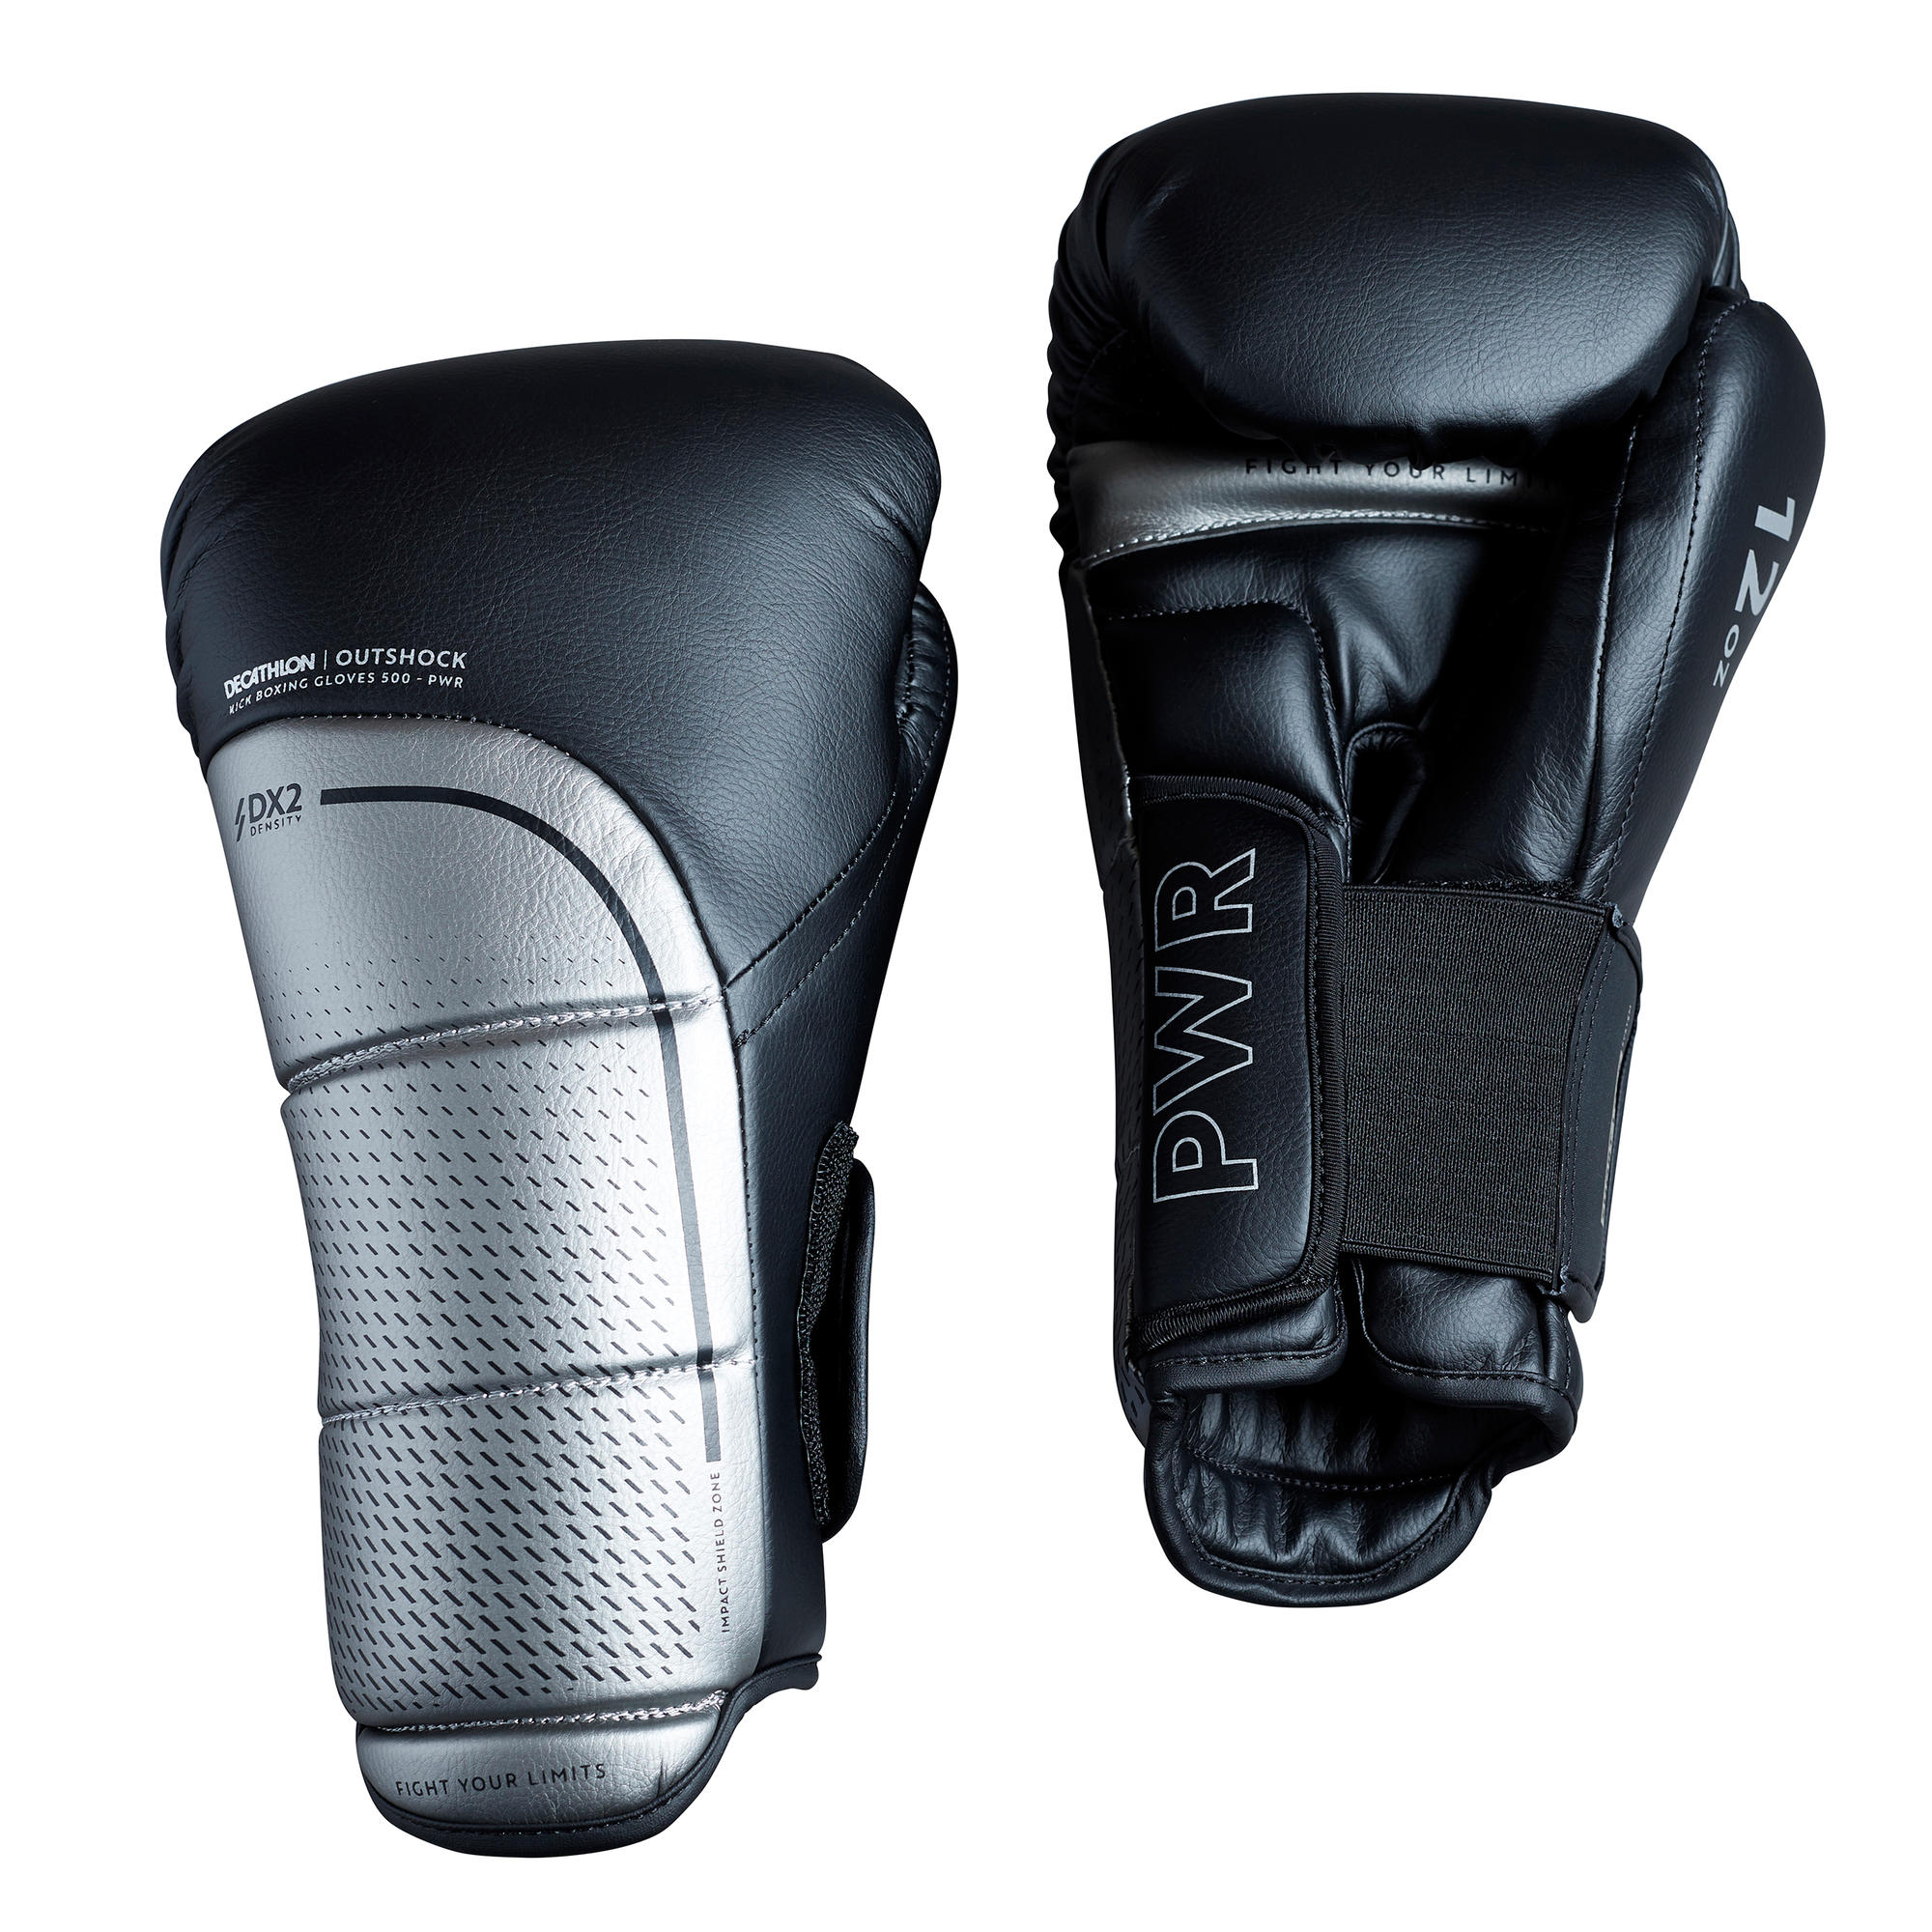 Kickboxing Gloves 500   Black Domyos By Decathlon 8554742 1839759 ?k=3ccc90ce863090b086cd0d3643632b6e